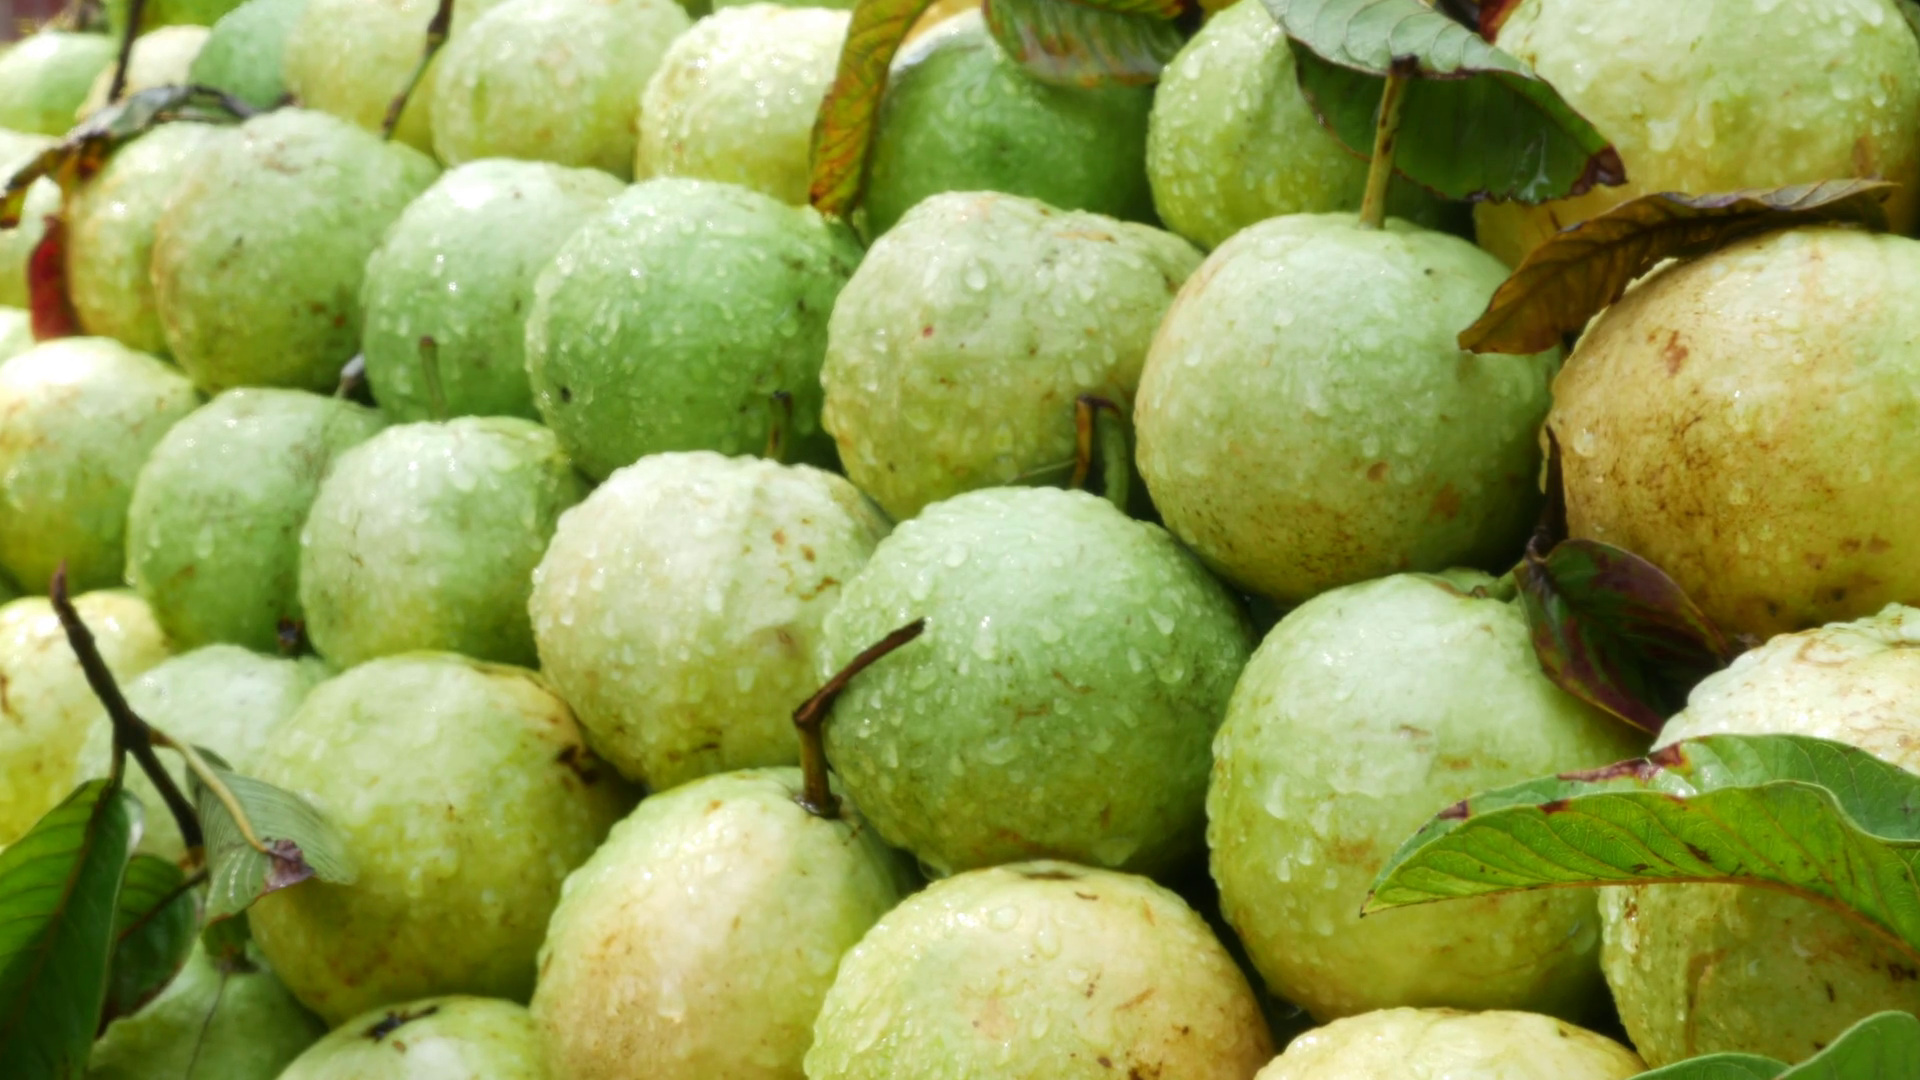 Farm Fresh Guava 4 k Mumbai Indian. Stock Video Footage - VideoBlocks